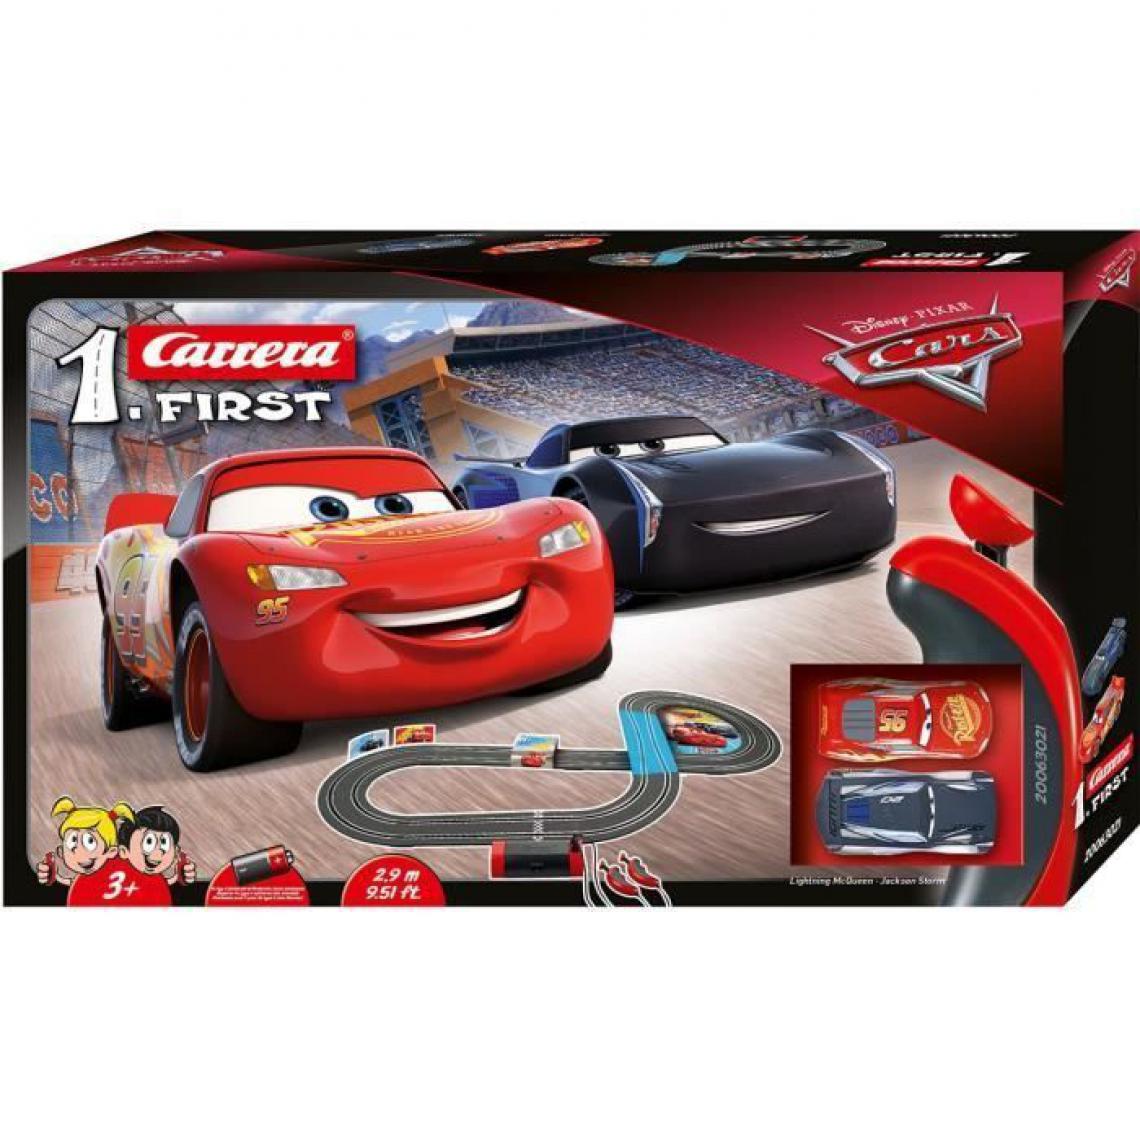 Carrera Montres - Carrera First Disney.Pixar Cars - 2,9 m - Circuits